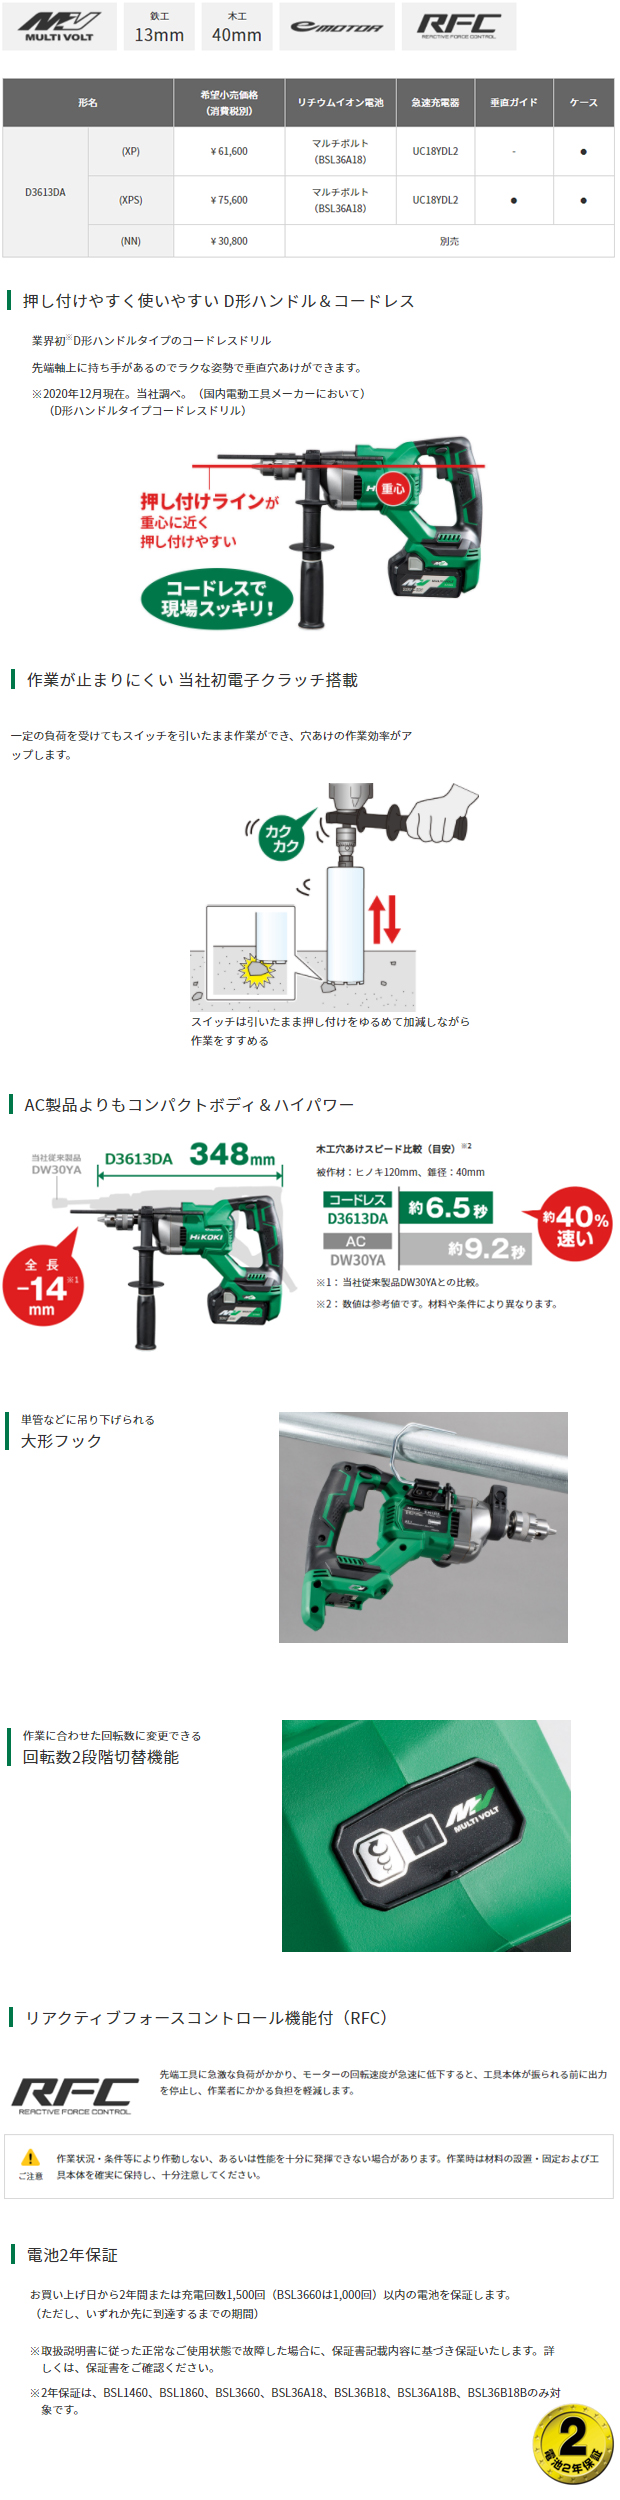 HiKOKI マルチボルトドリル D3613DA 電動工具・エアー工具・大工道具